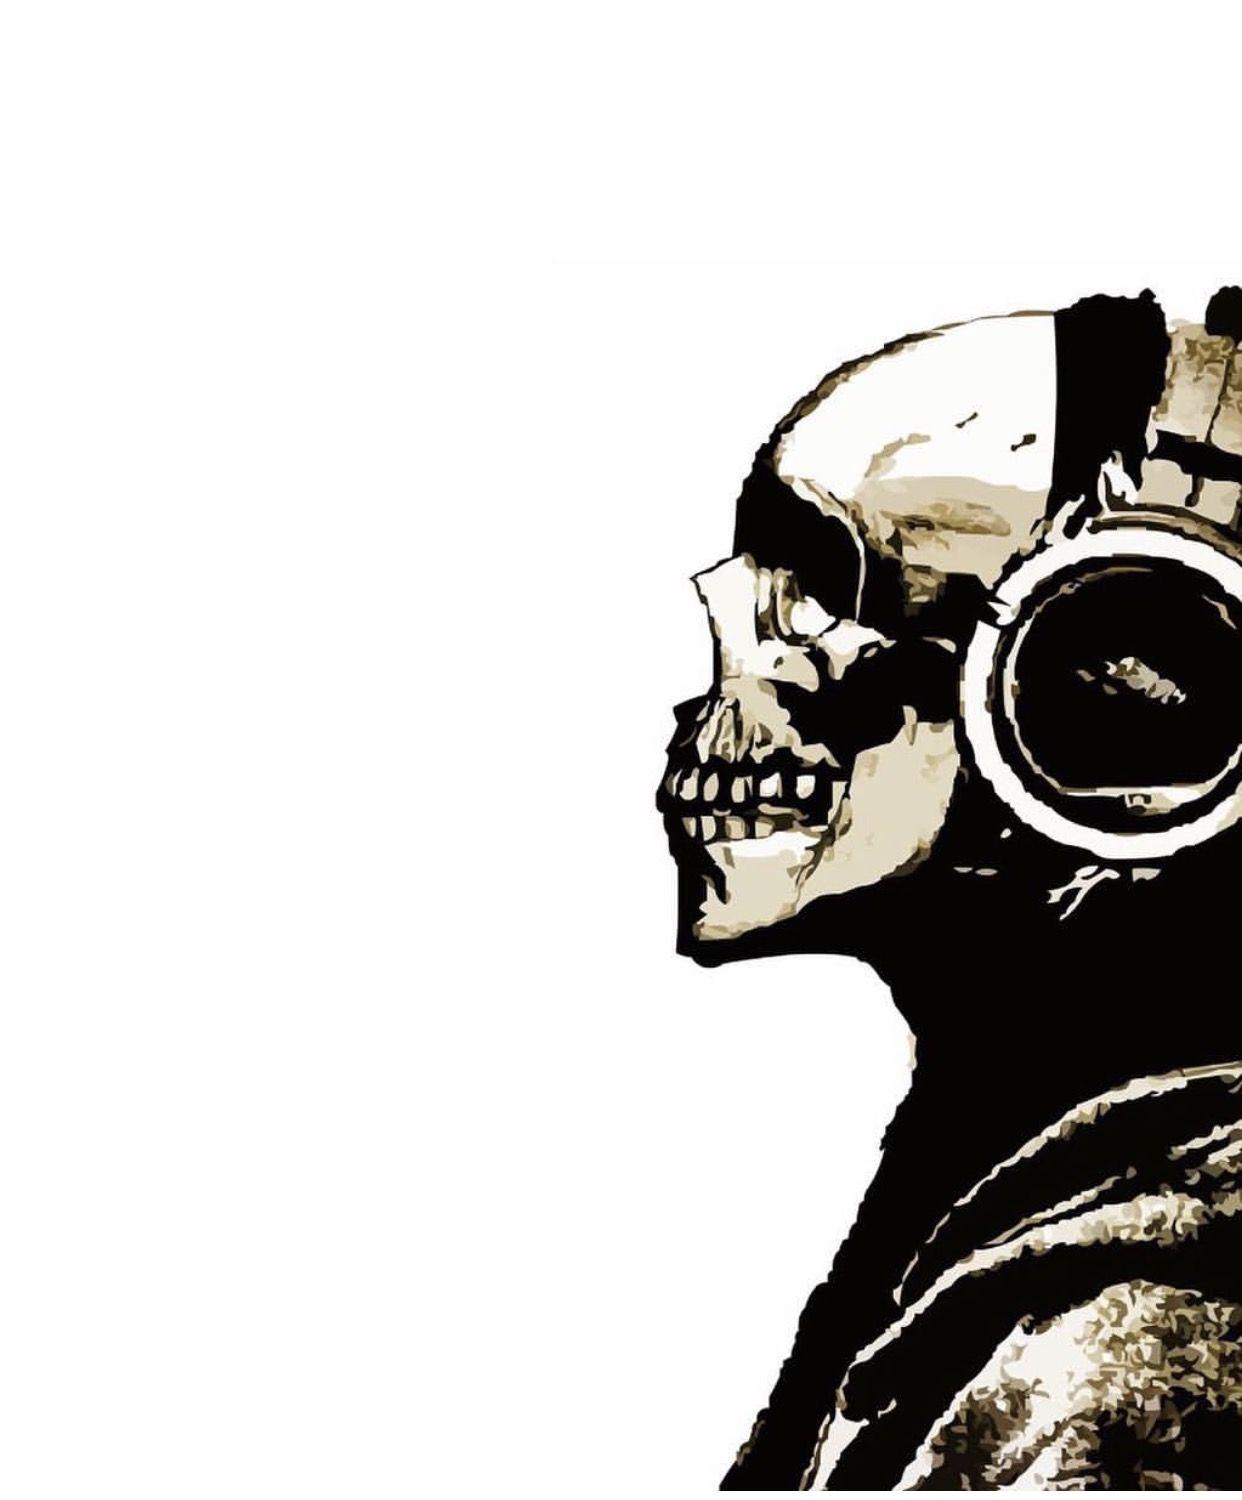 Skull wallpaper image by Jo Scott on Stuff and junk. Headphones